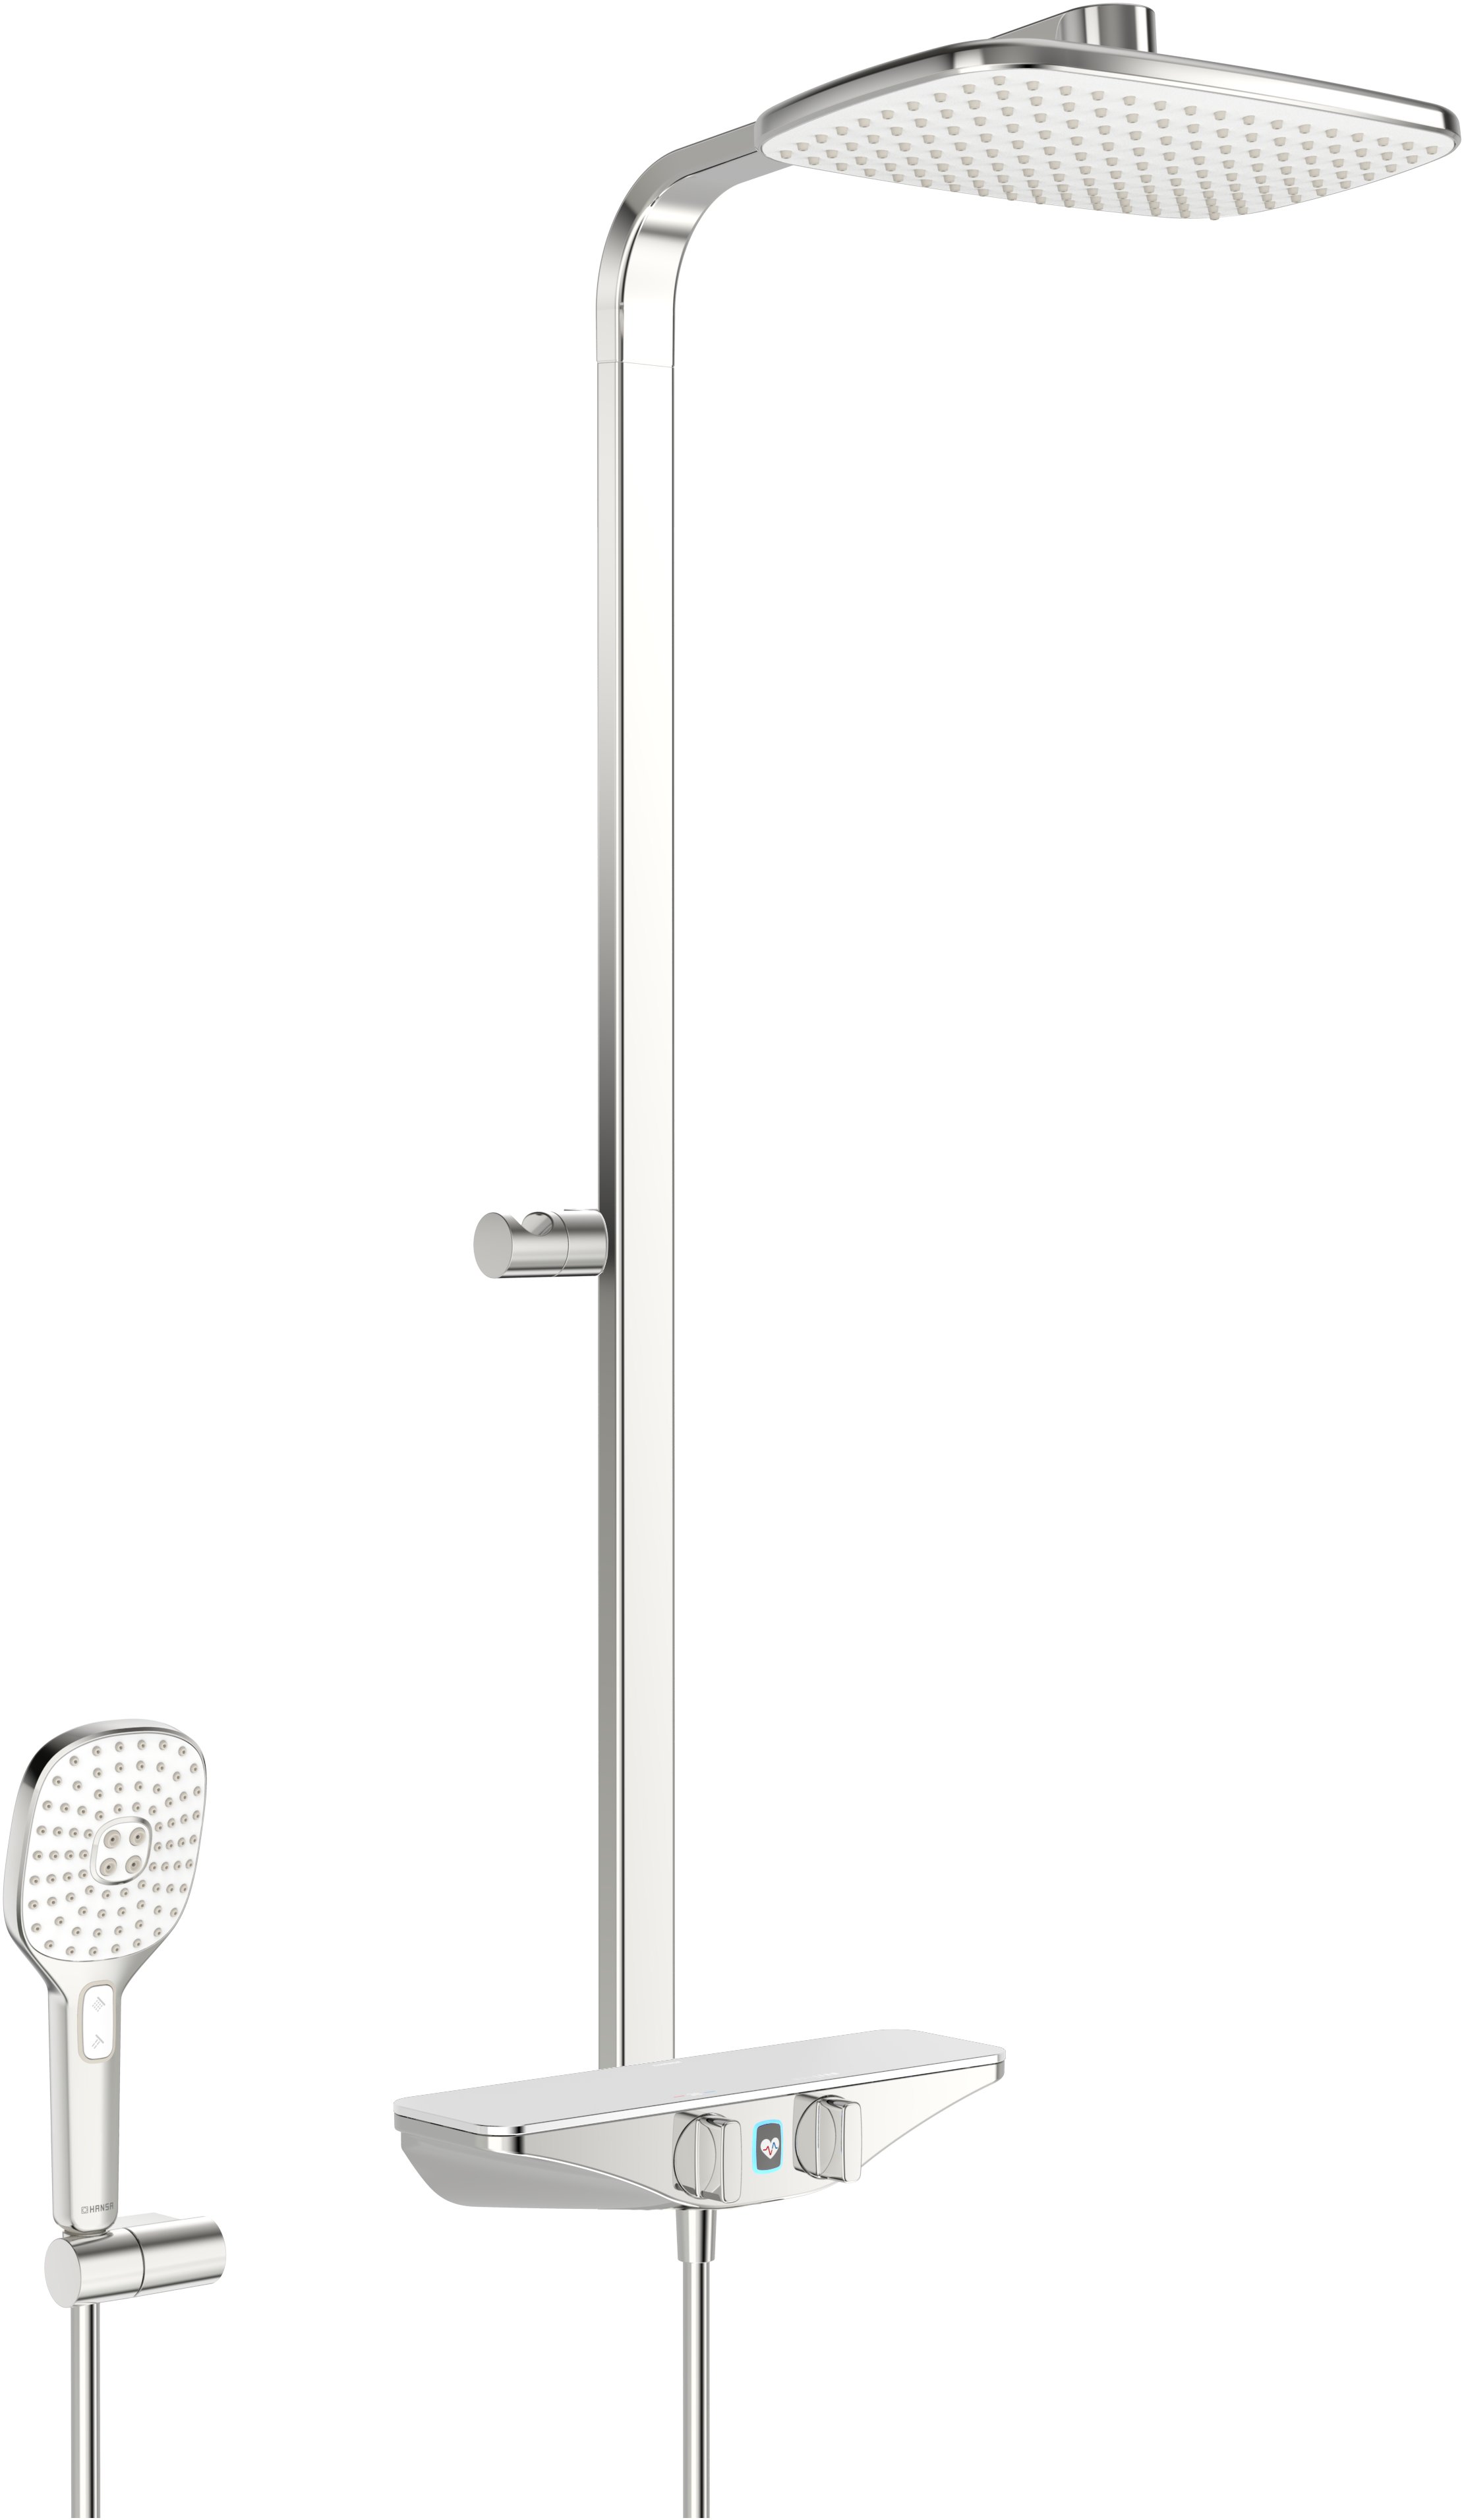 Hansa Hansaemotion Wellfit sprchový systém - nástěnná termostatická sprchová baterie, polička bílá 5865017282